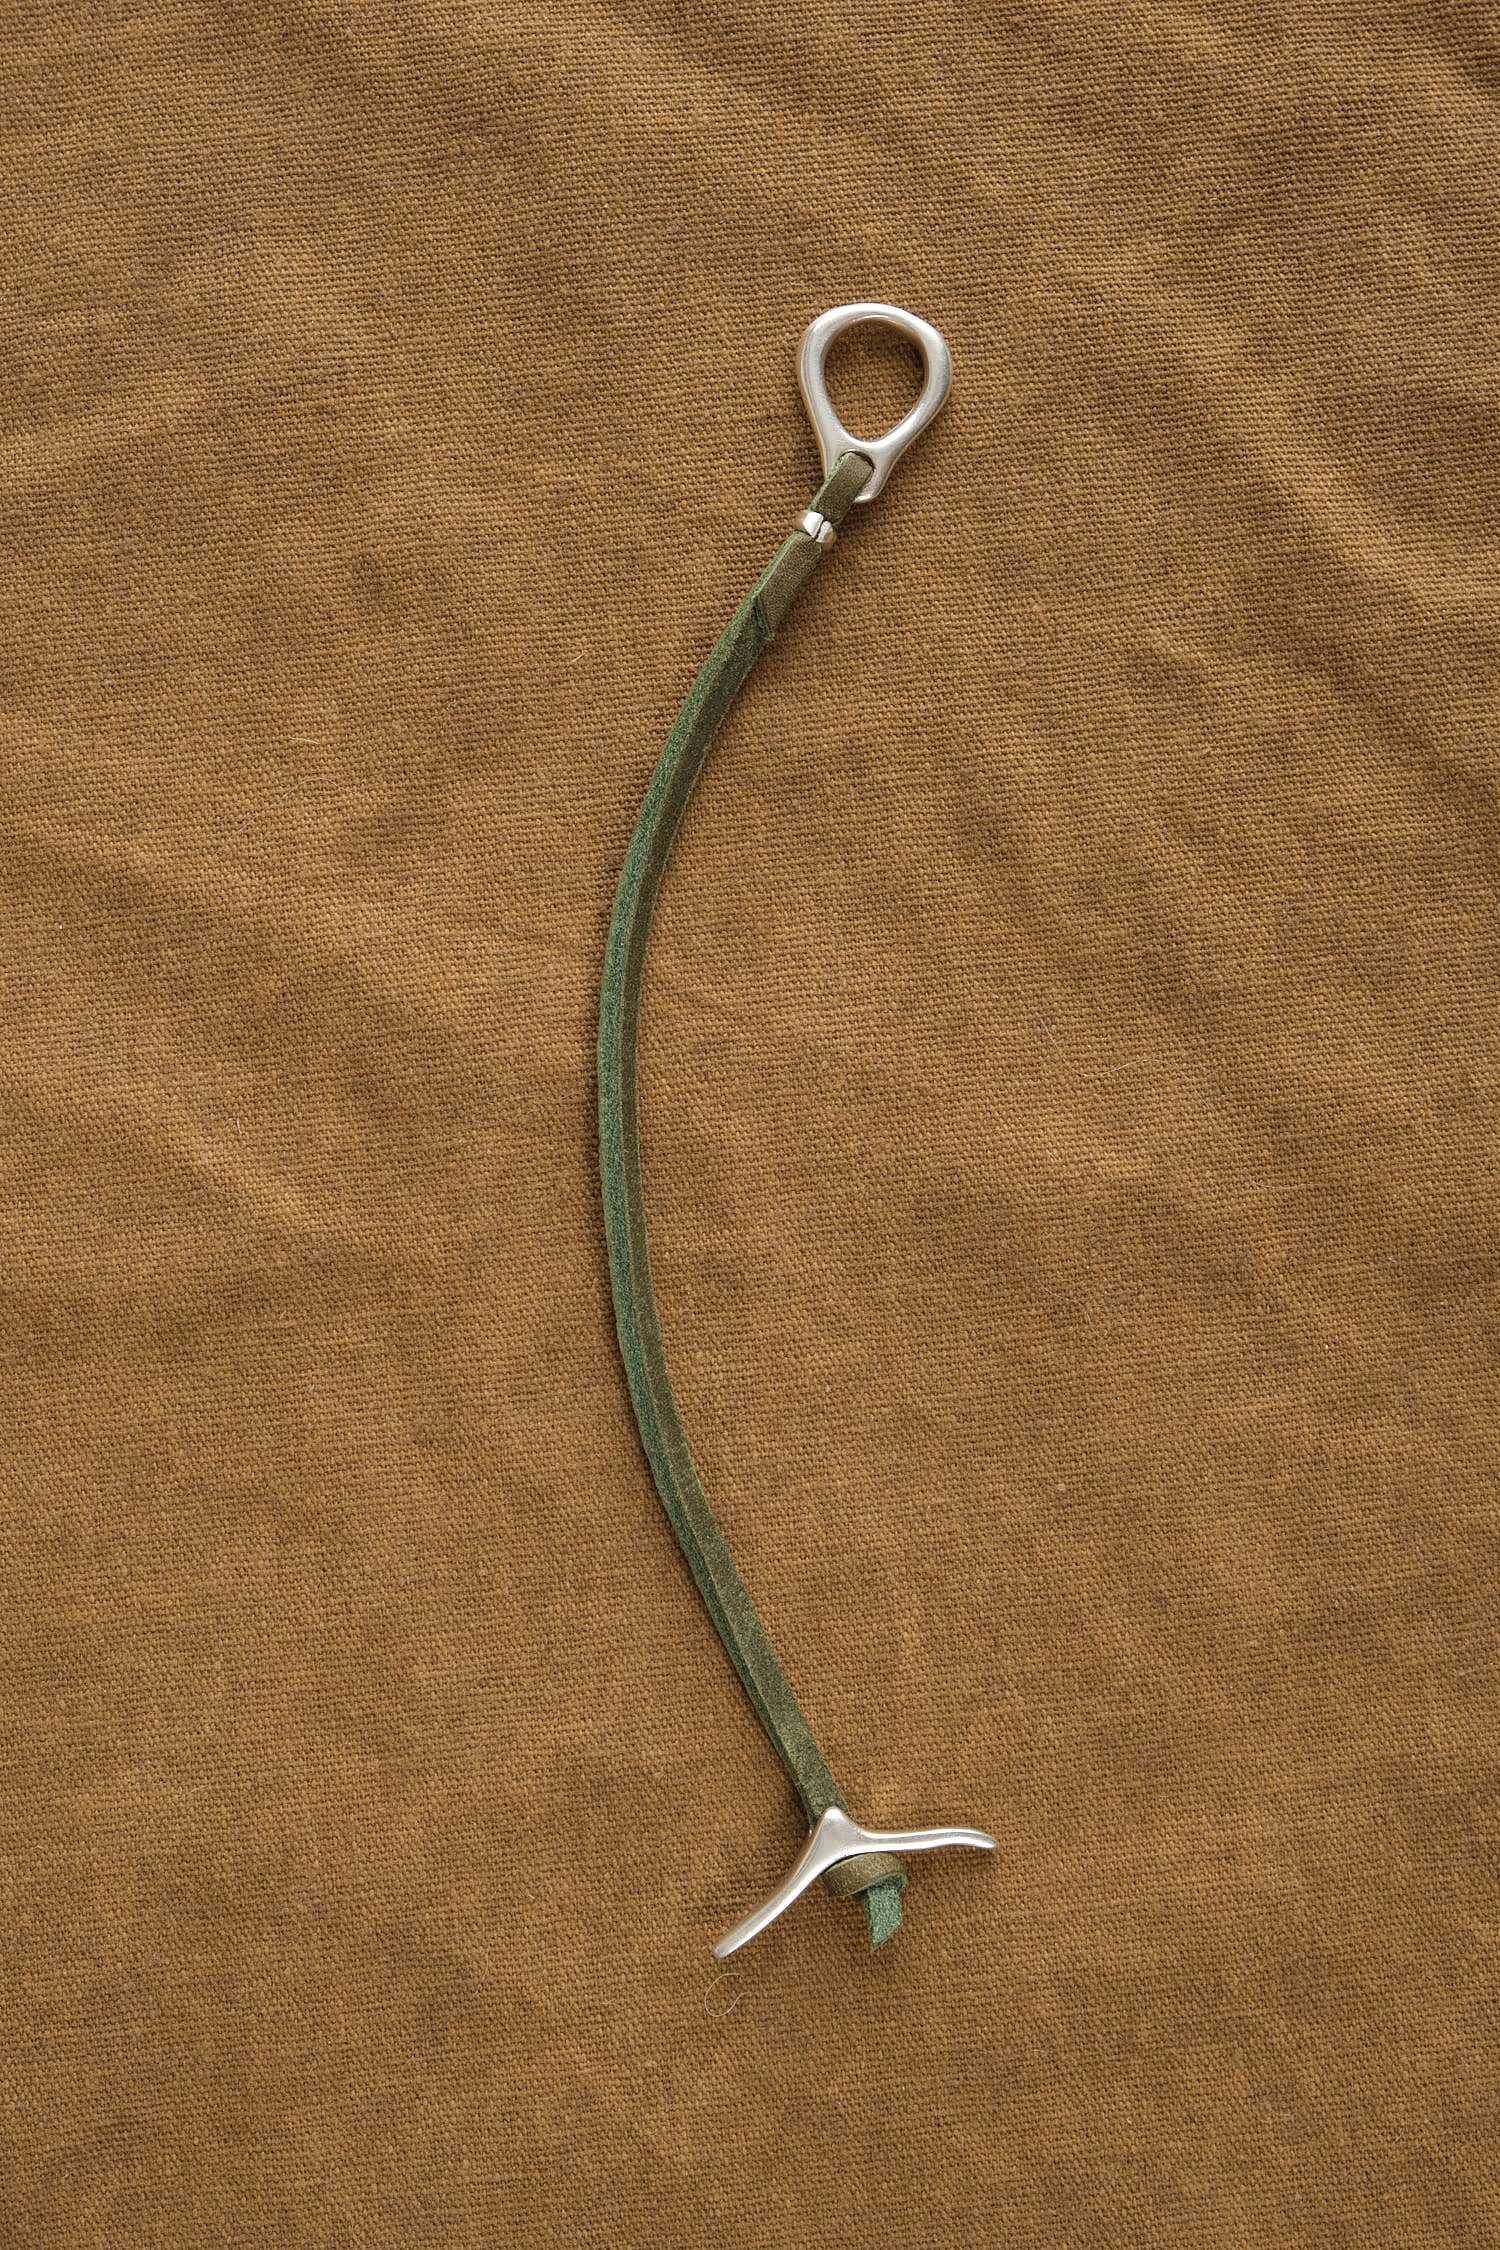 JP Clasp Rawhide Bracelet in Olive long